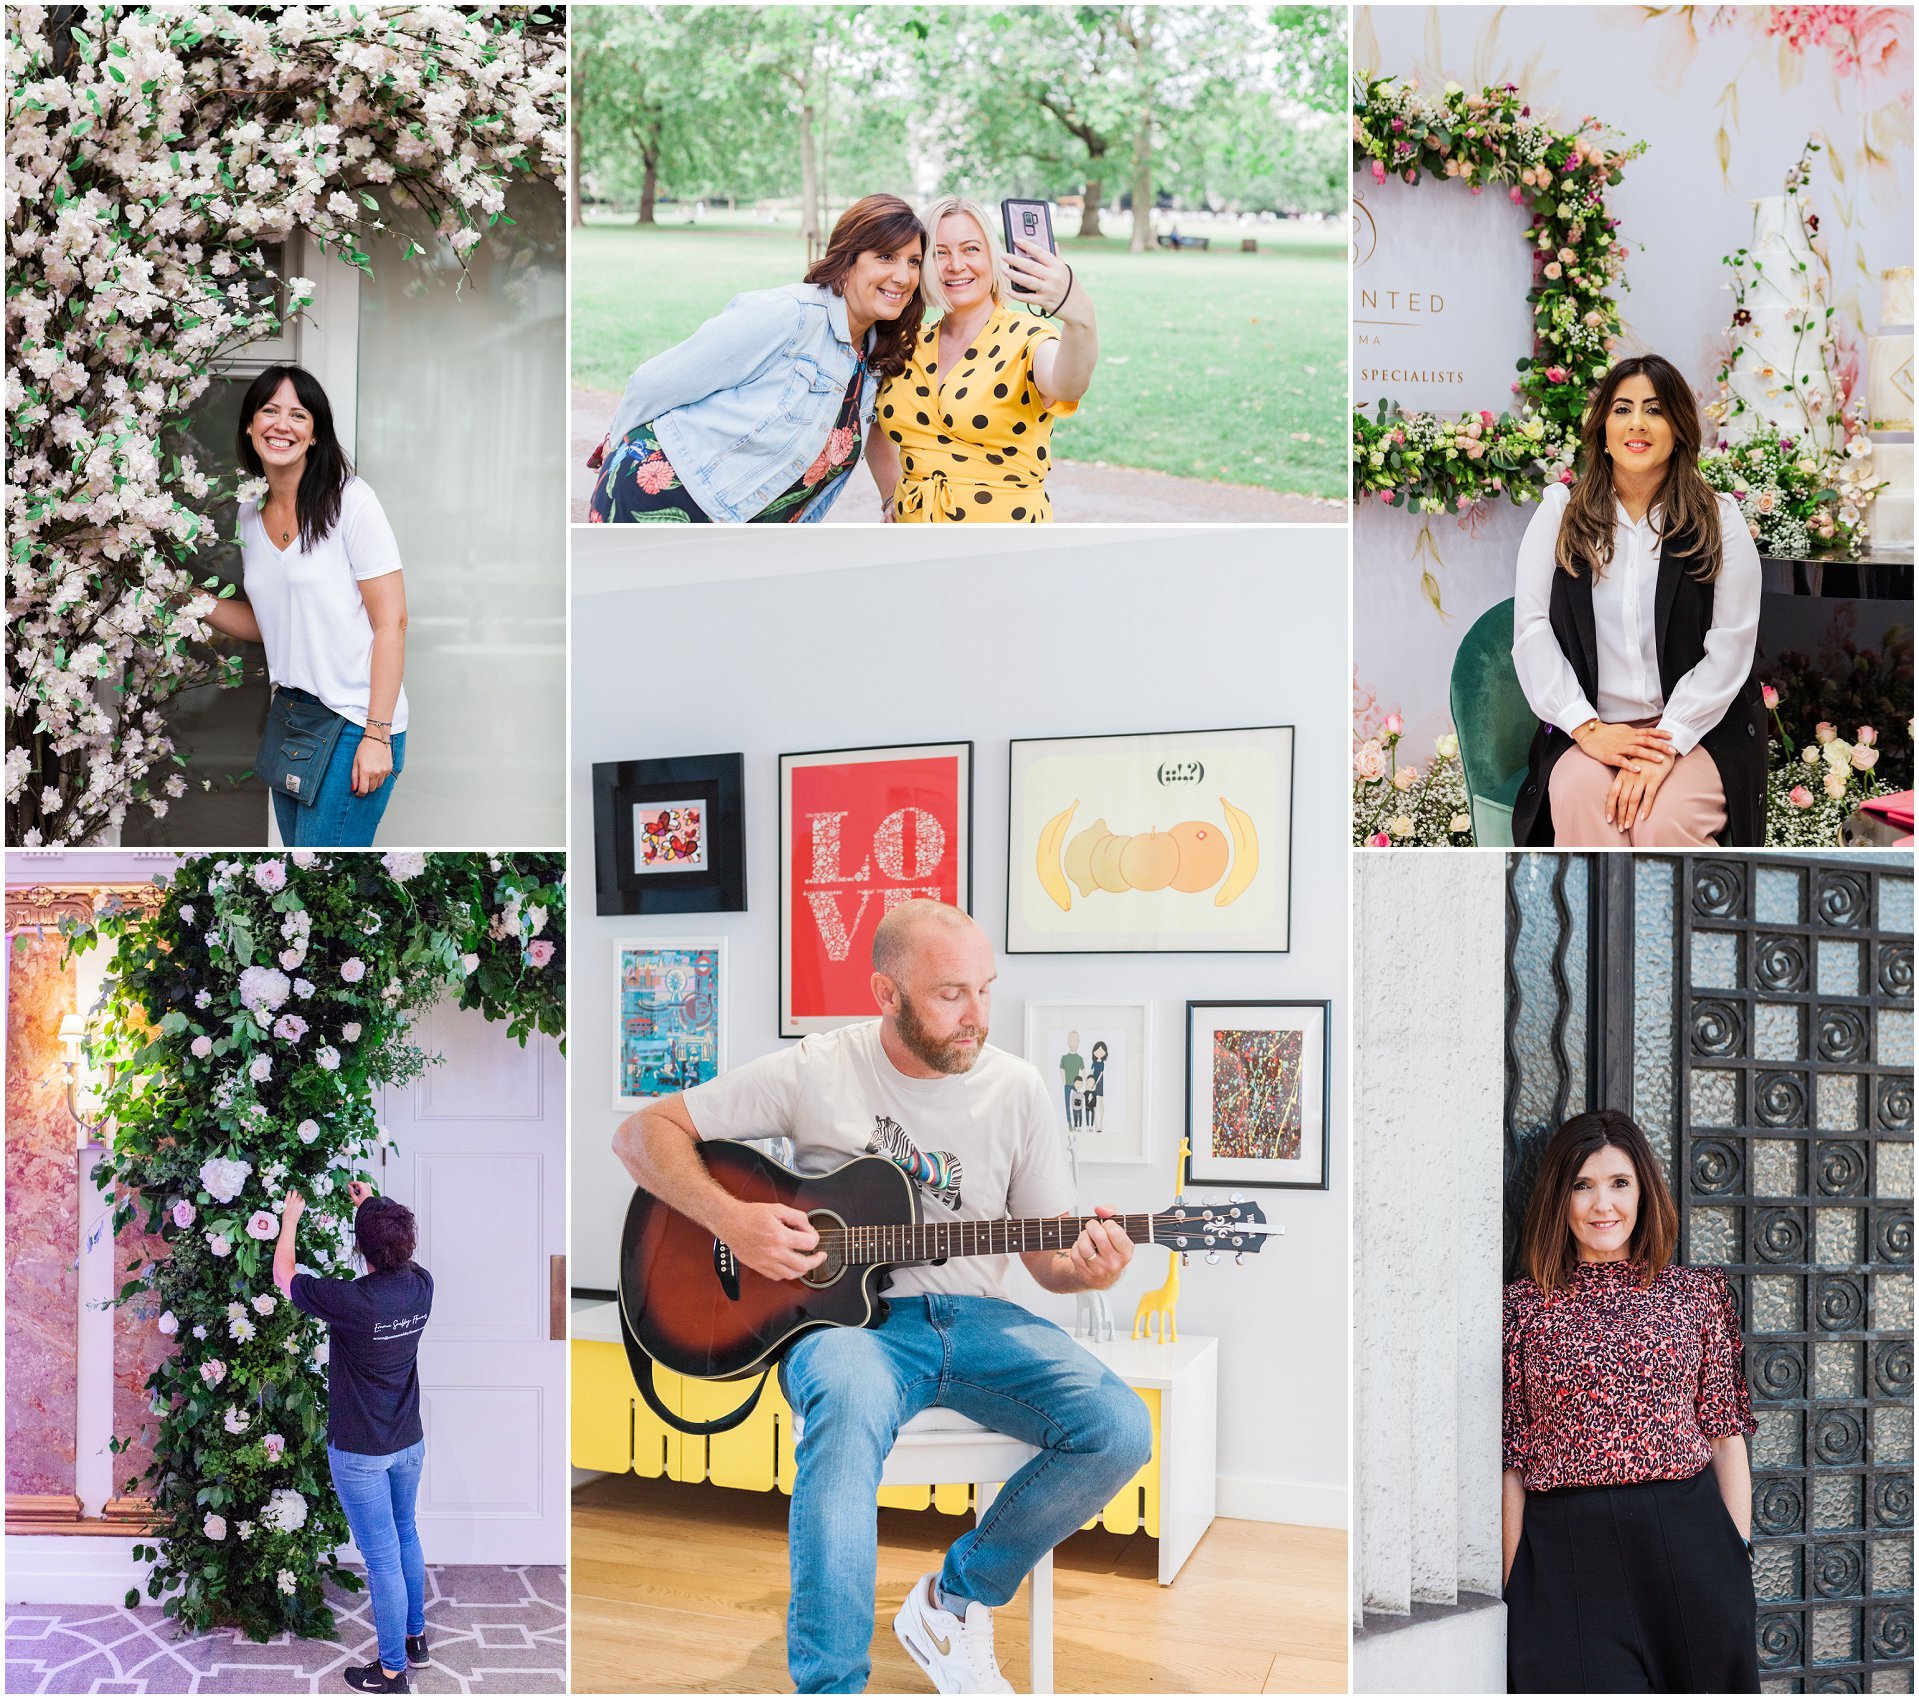 Best of 2019 London branding photography - entrepreneur portraits by London brand photographer AKP Branding Stories